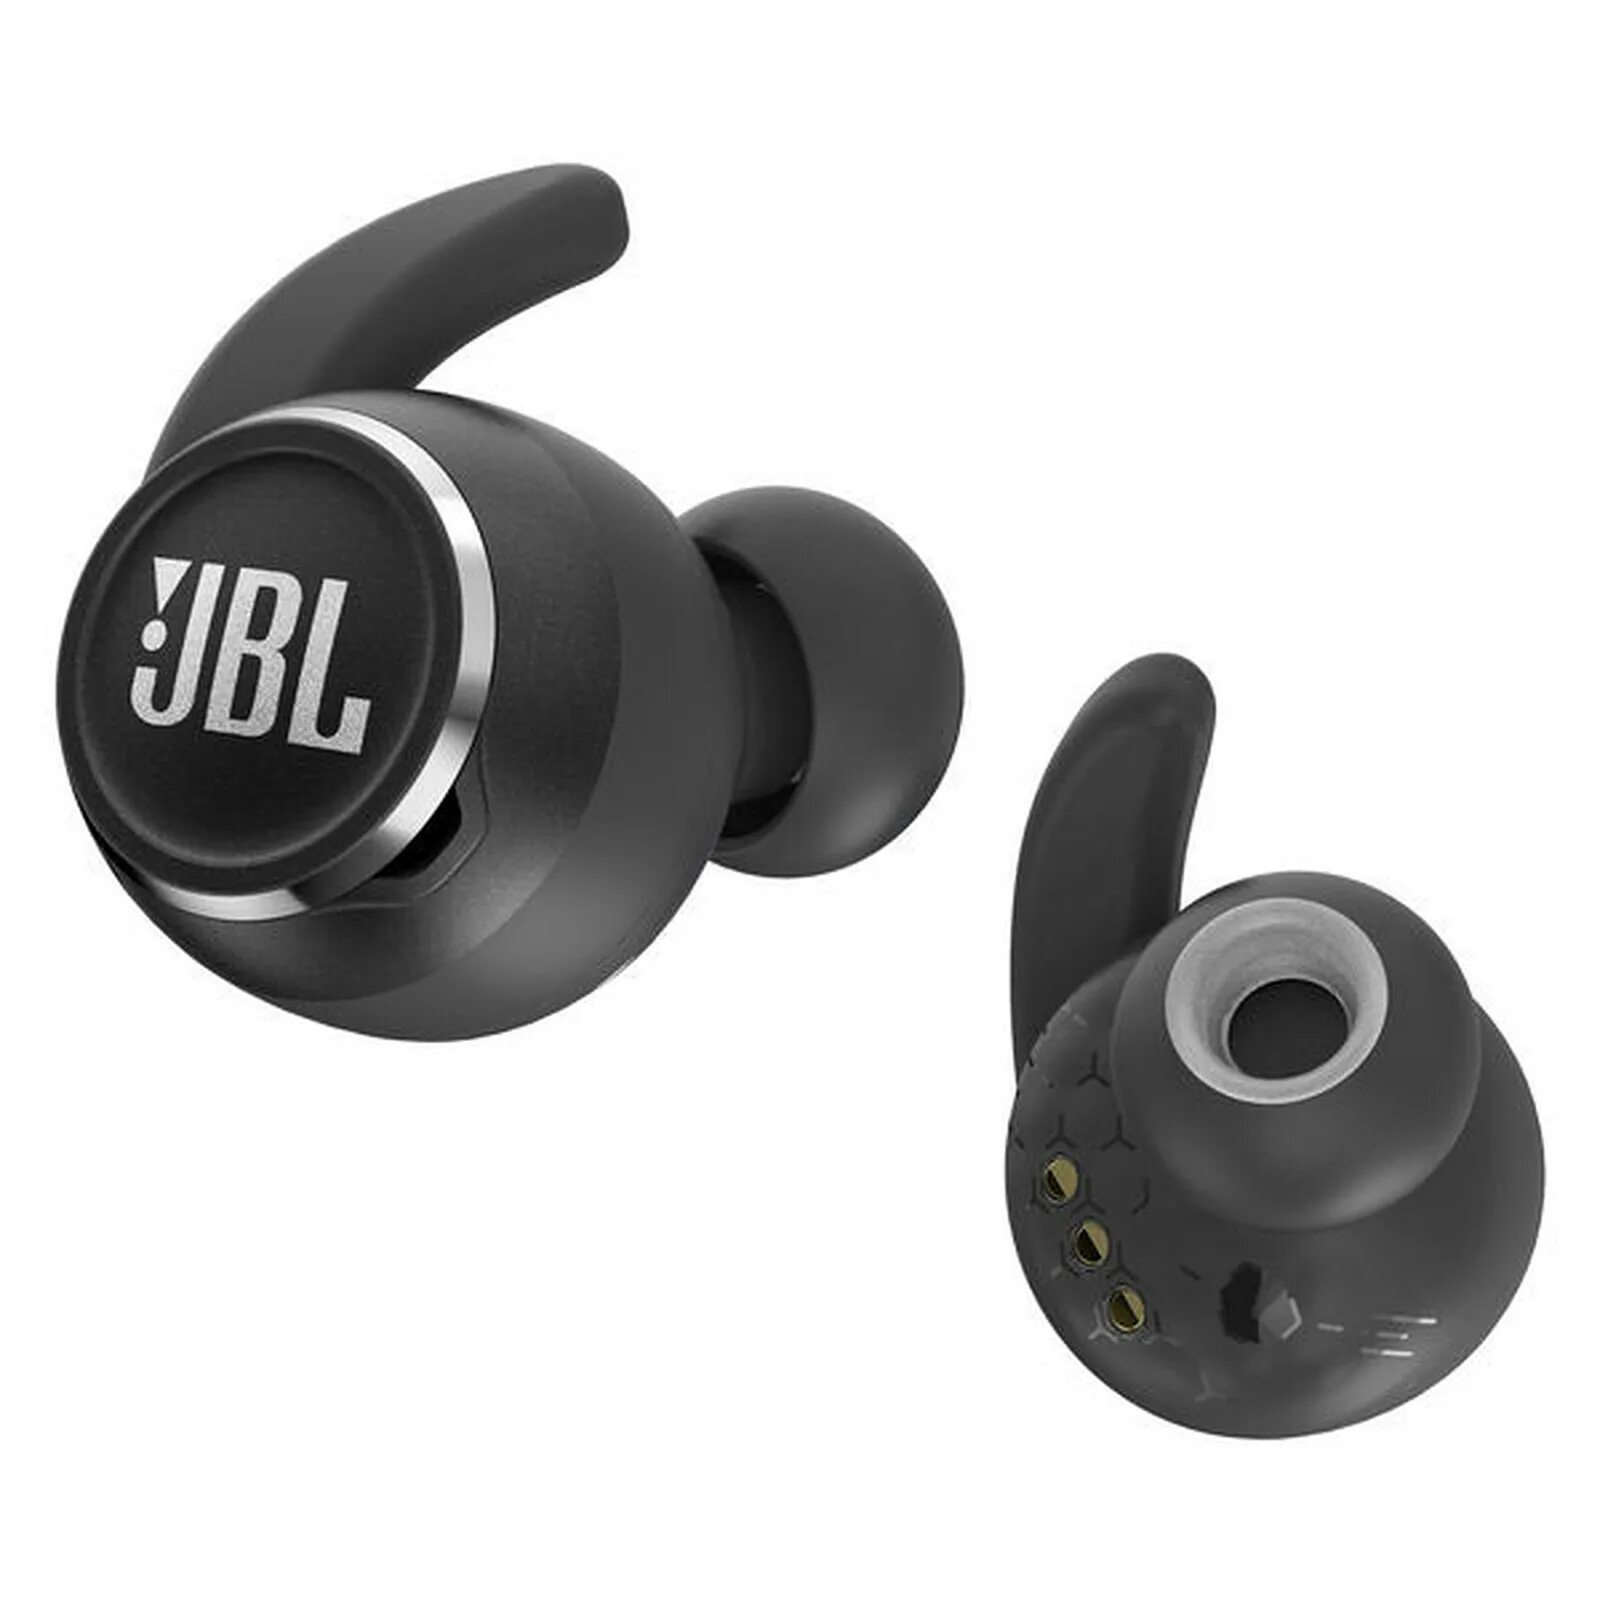 Наушники JBL reflect Mini. Беспроводные наушники JBL TWS. Беспроводные наушники JBL reflect Mini NC,черный. Wireless Earbuds беспроводные наушники JBL. Jbl wireless купить